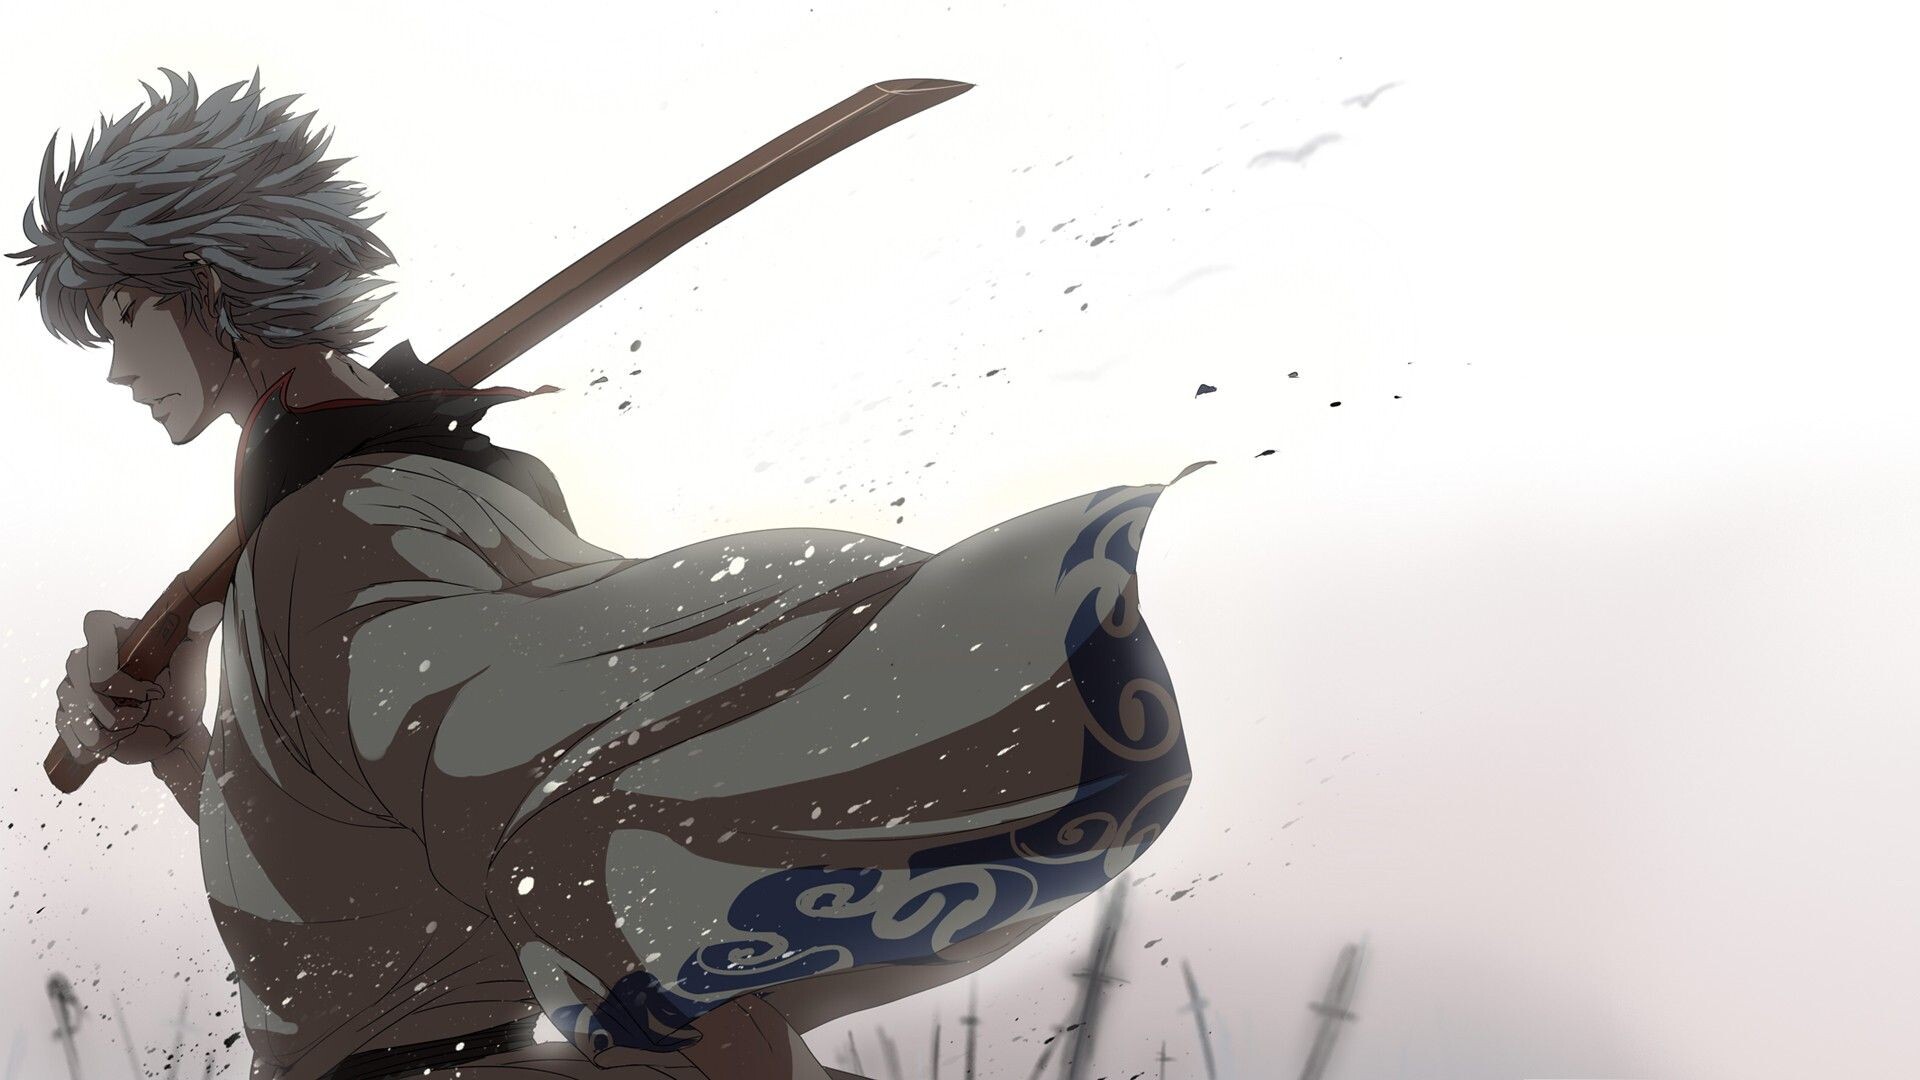 Gintama (TV Series): Warrior, A veteran in the Joui War, Range of fighting abilities, Powerful swordplay. 1920x1080 Full HD Background.